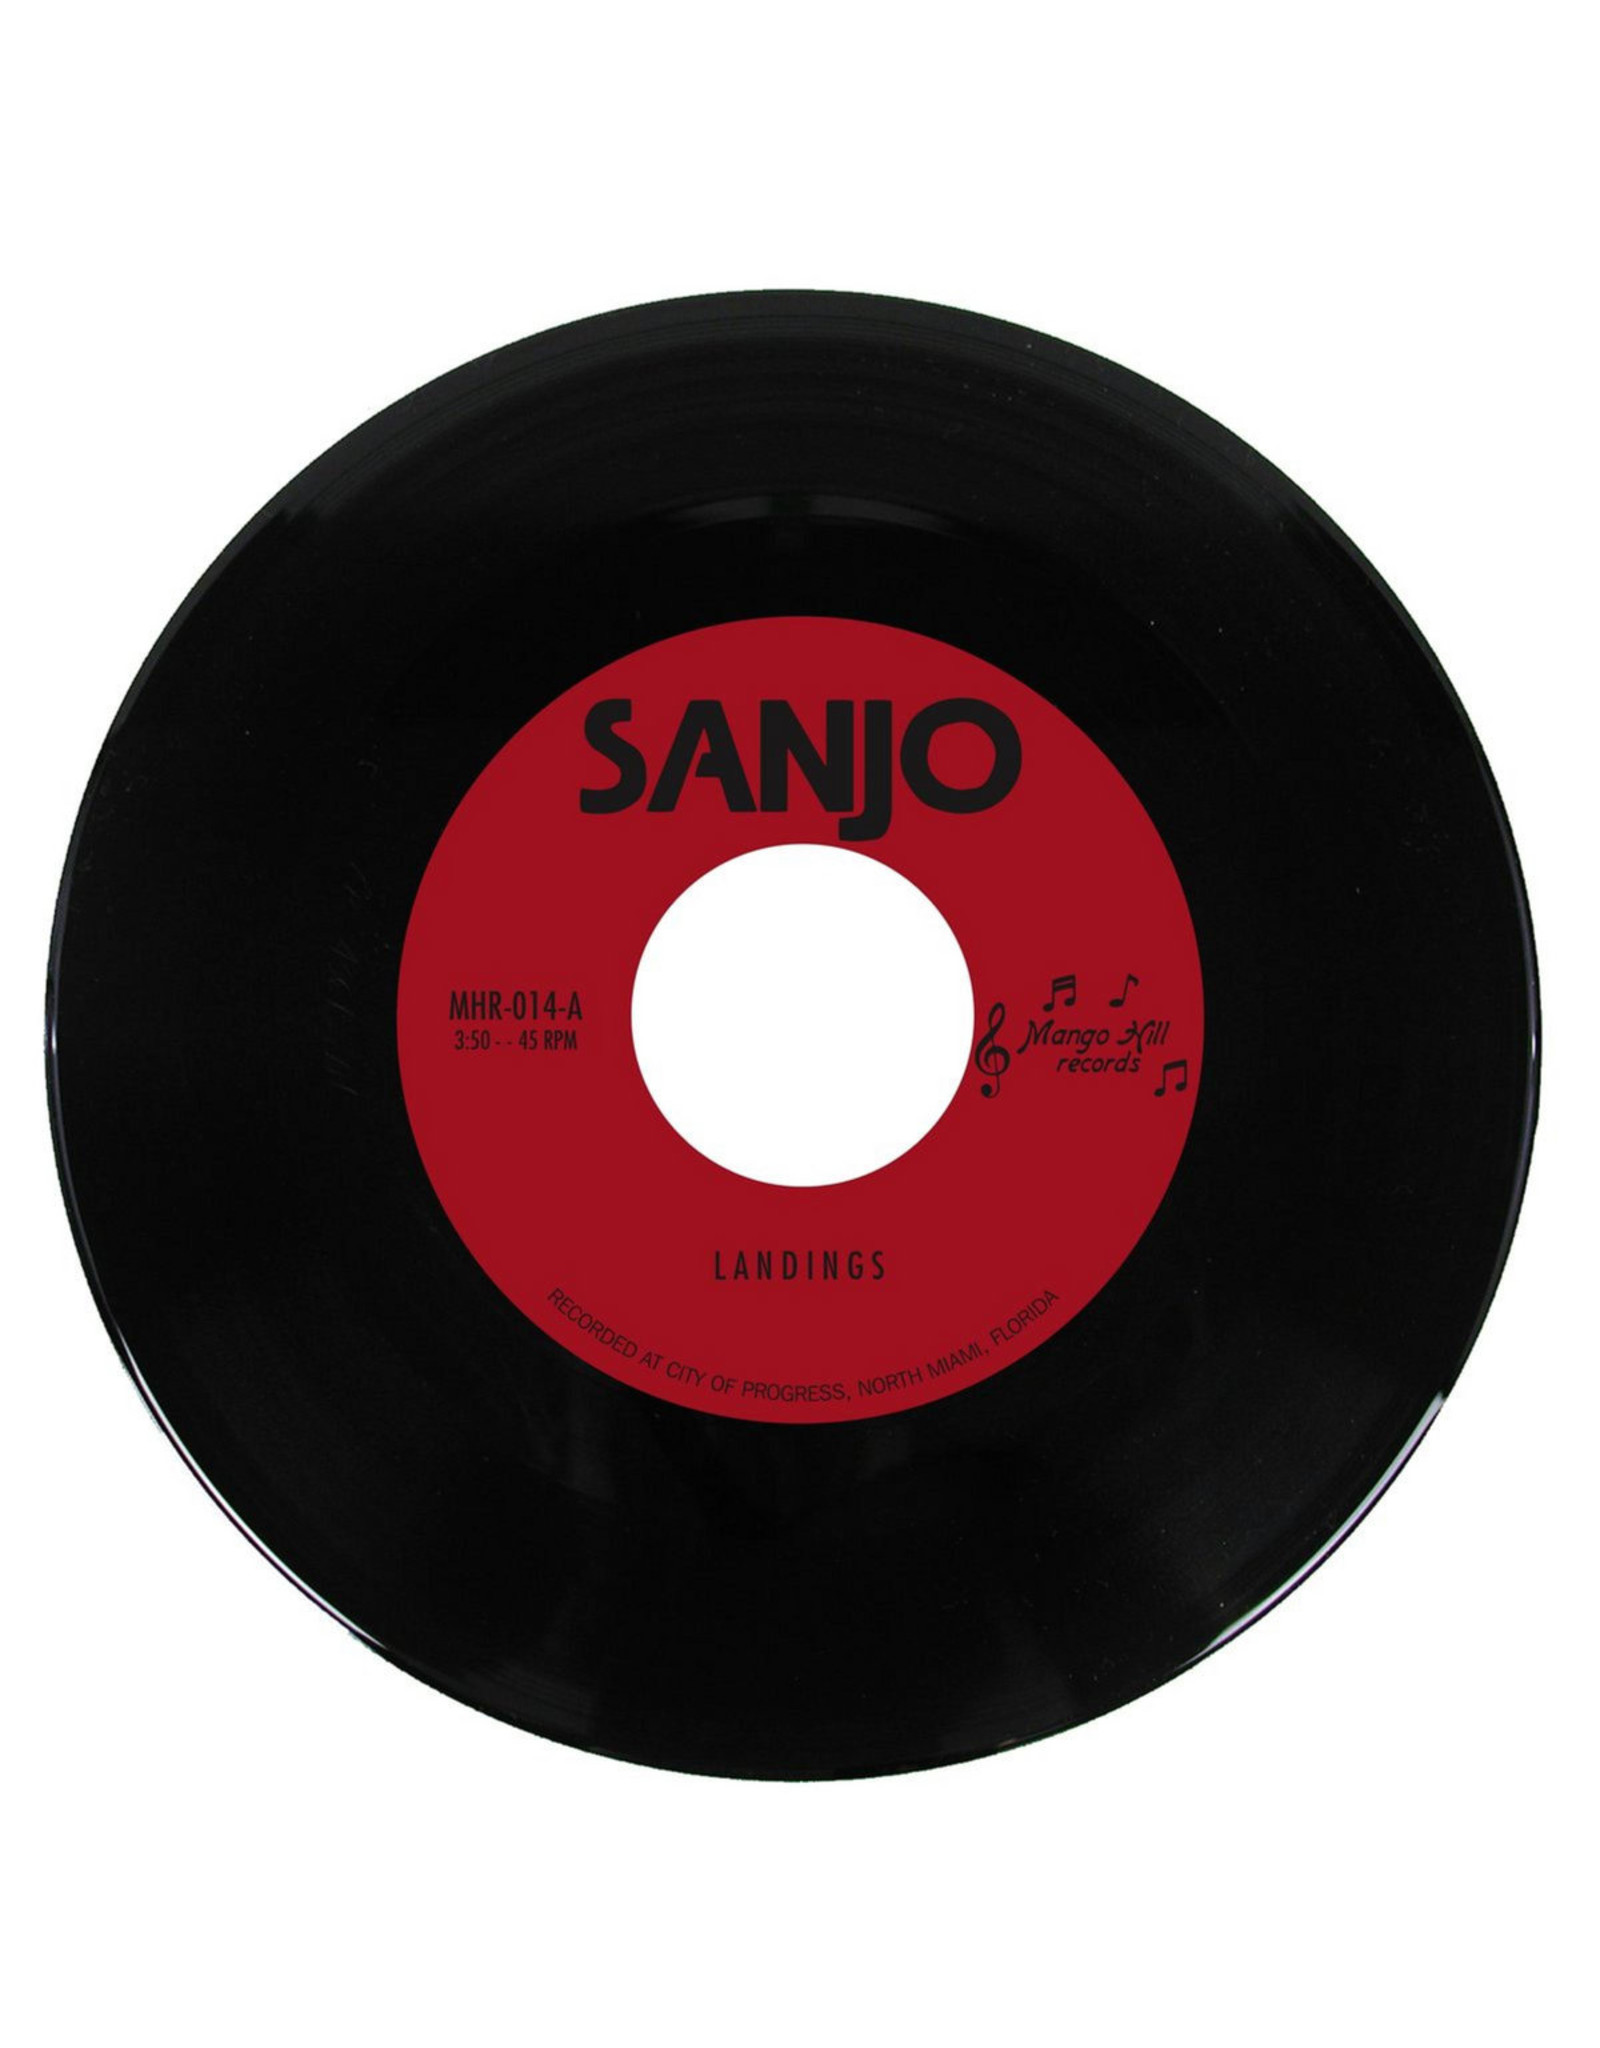 New Vinyl Sanjo - Landings 7" EP